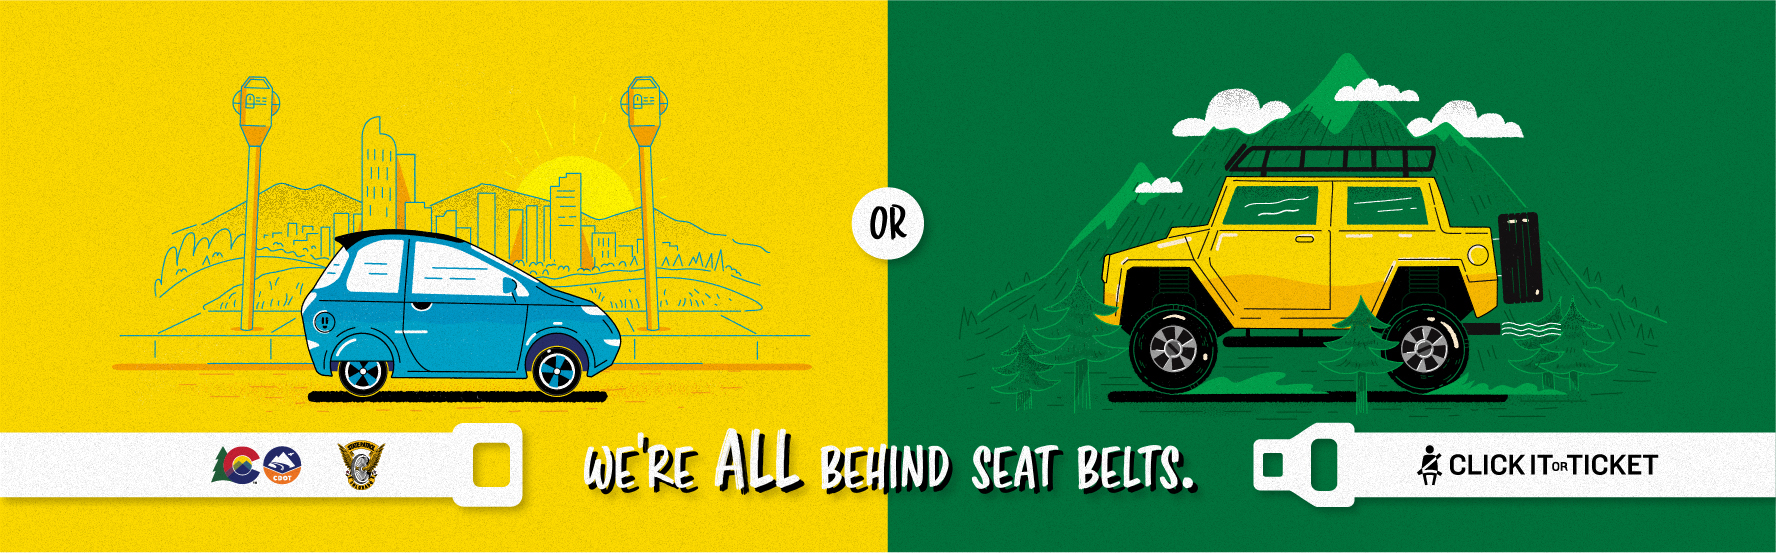 We're All Behind Seat Belts - Vehicles Billboard detail image